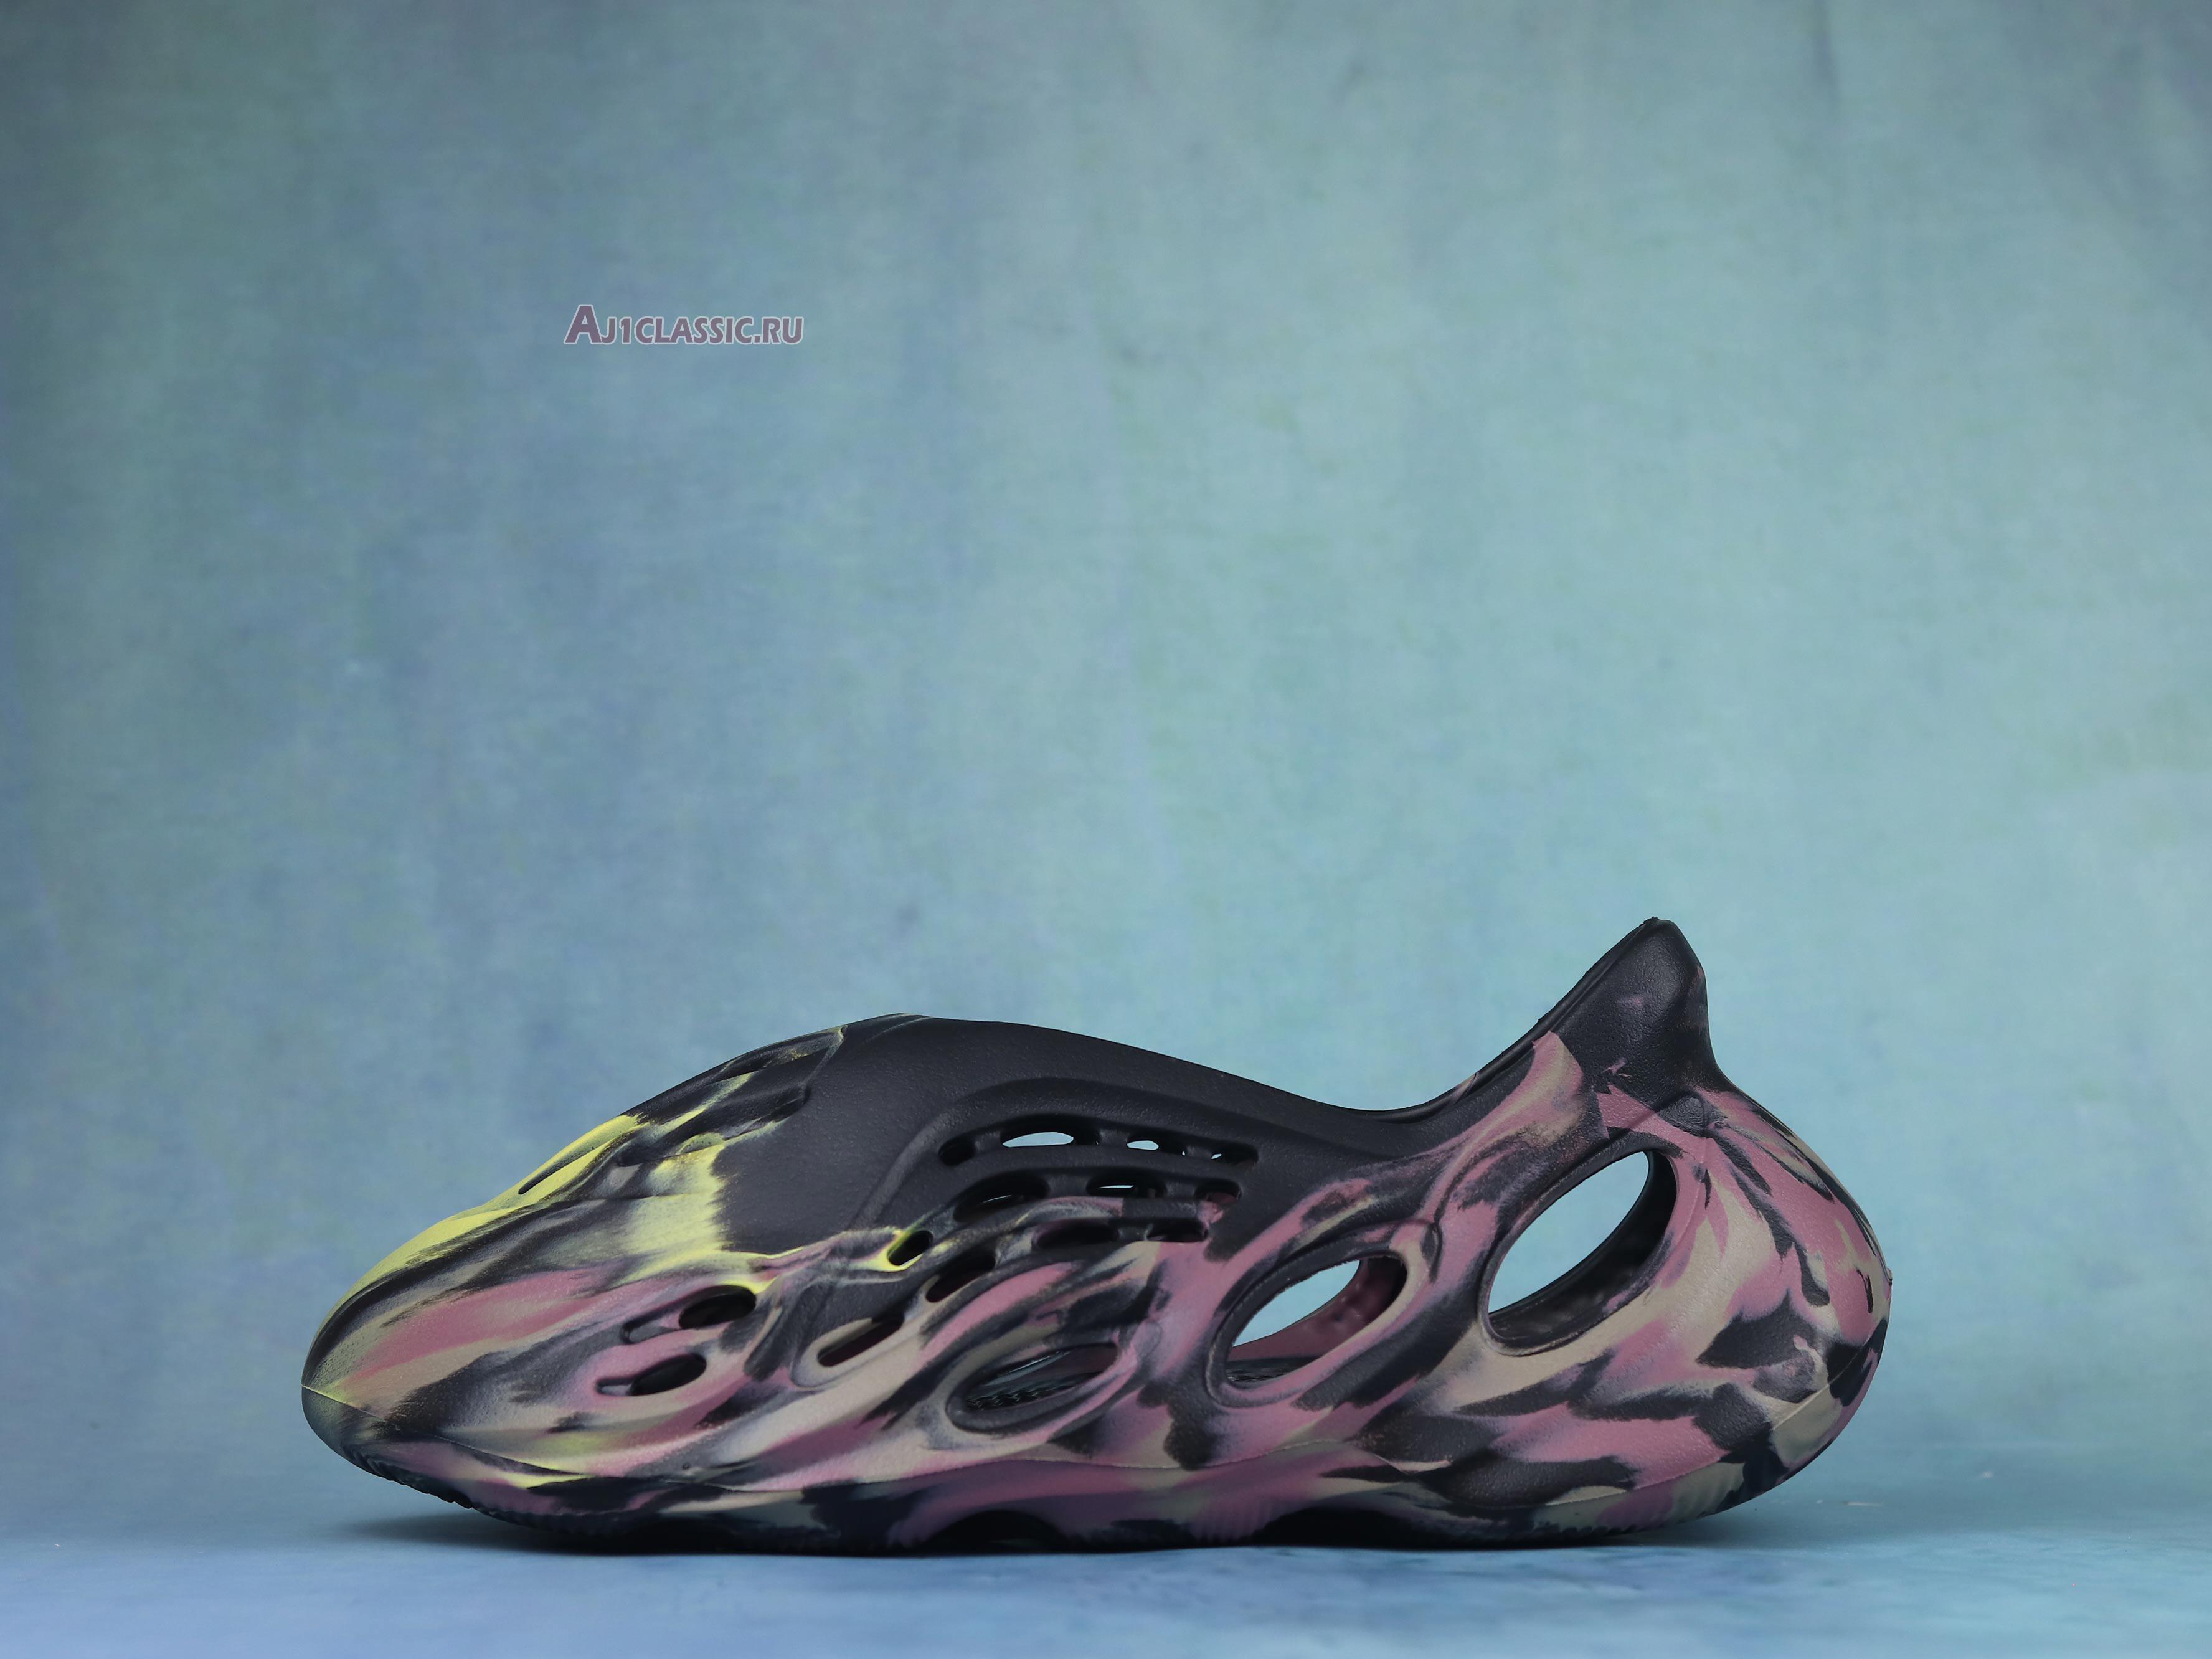 Adidas Yeezy Foam Runner "MX Carbon" IG9562